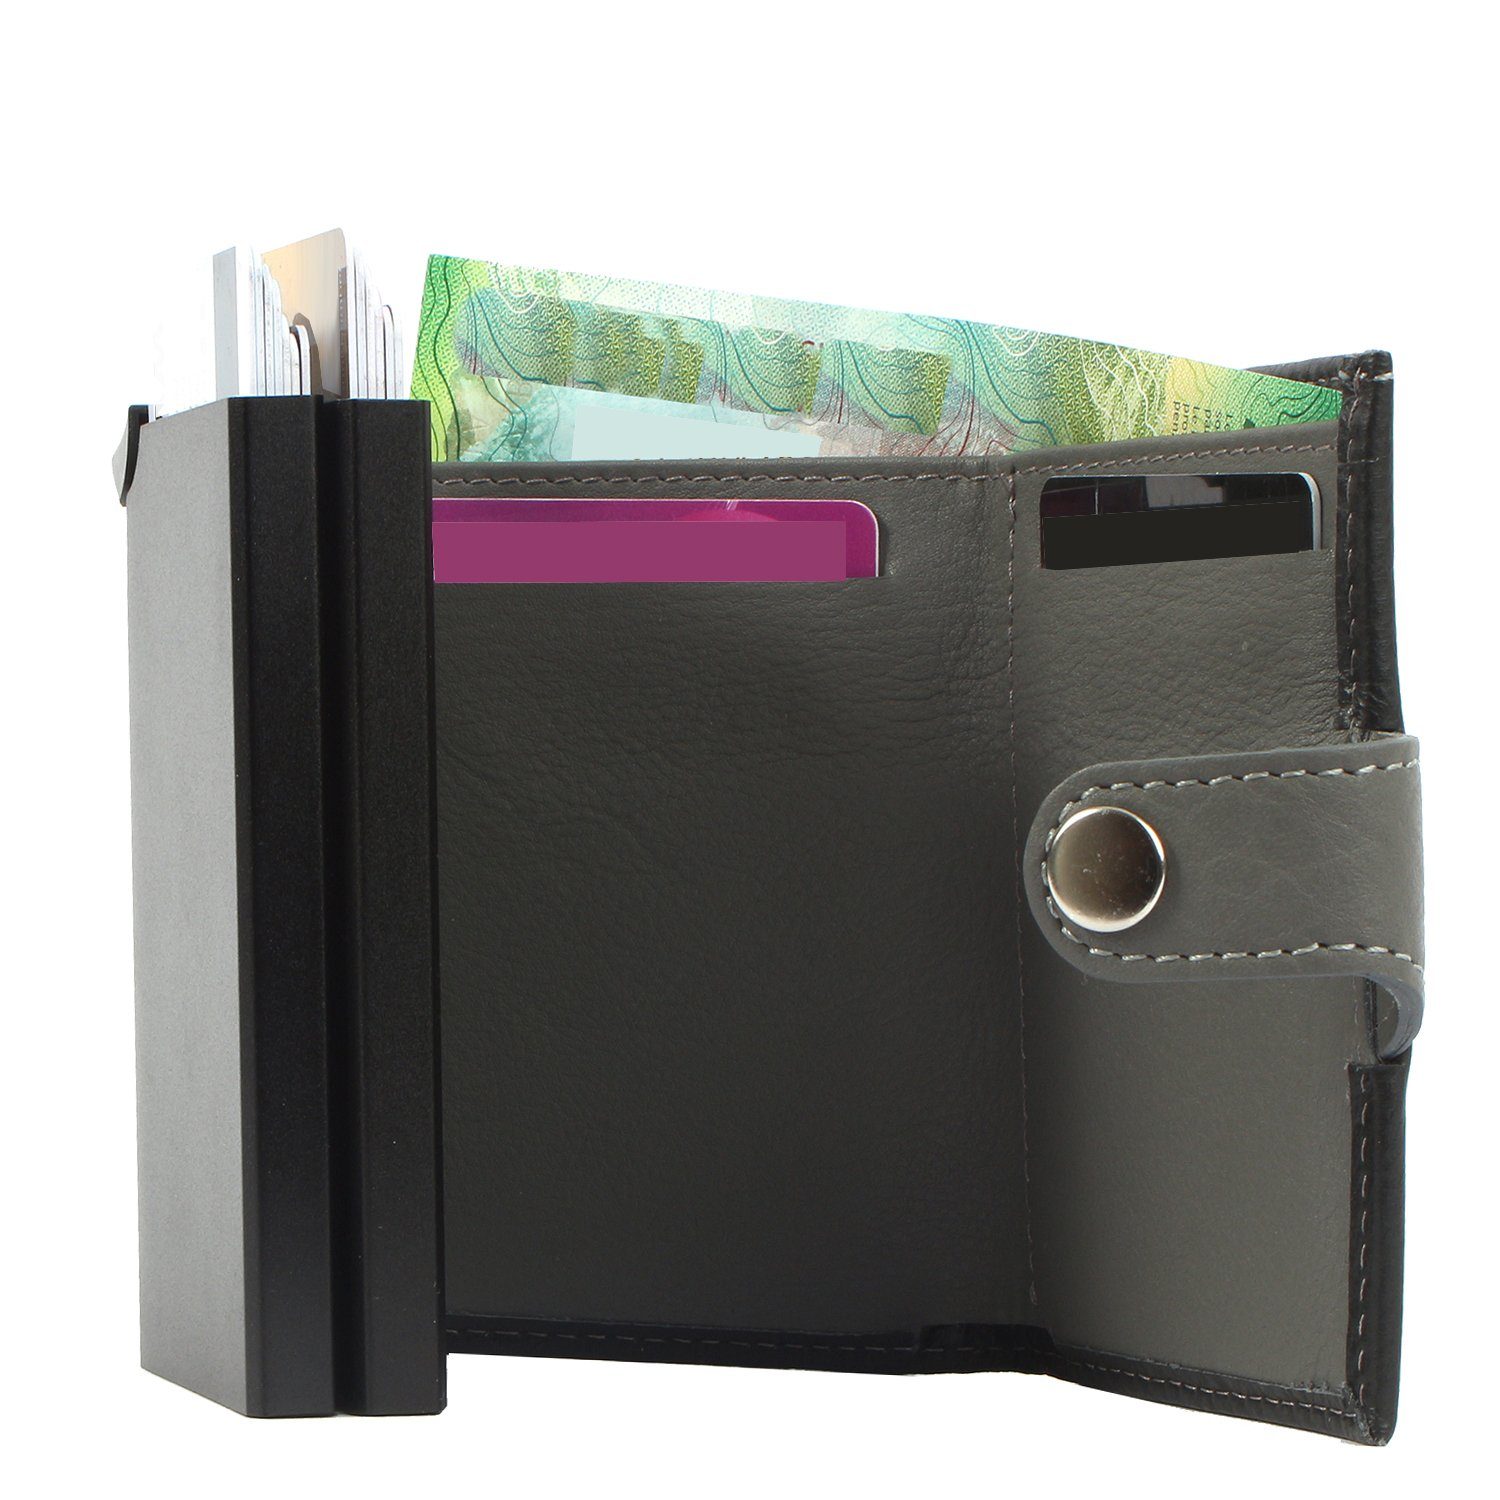 Margelisch Mini Geldbörse noonyu double natural aus leather, Leder RFID Upcycling Kreditkartenbörse